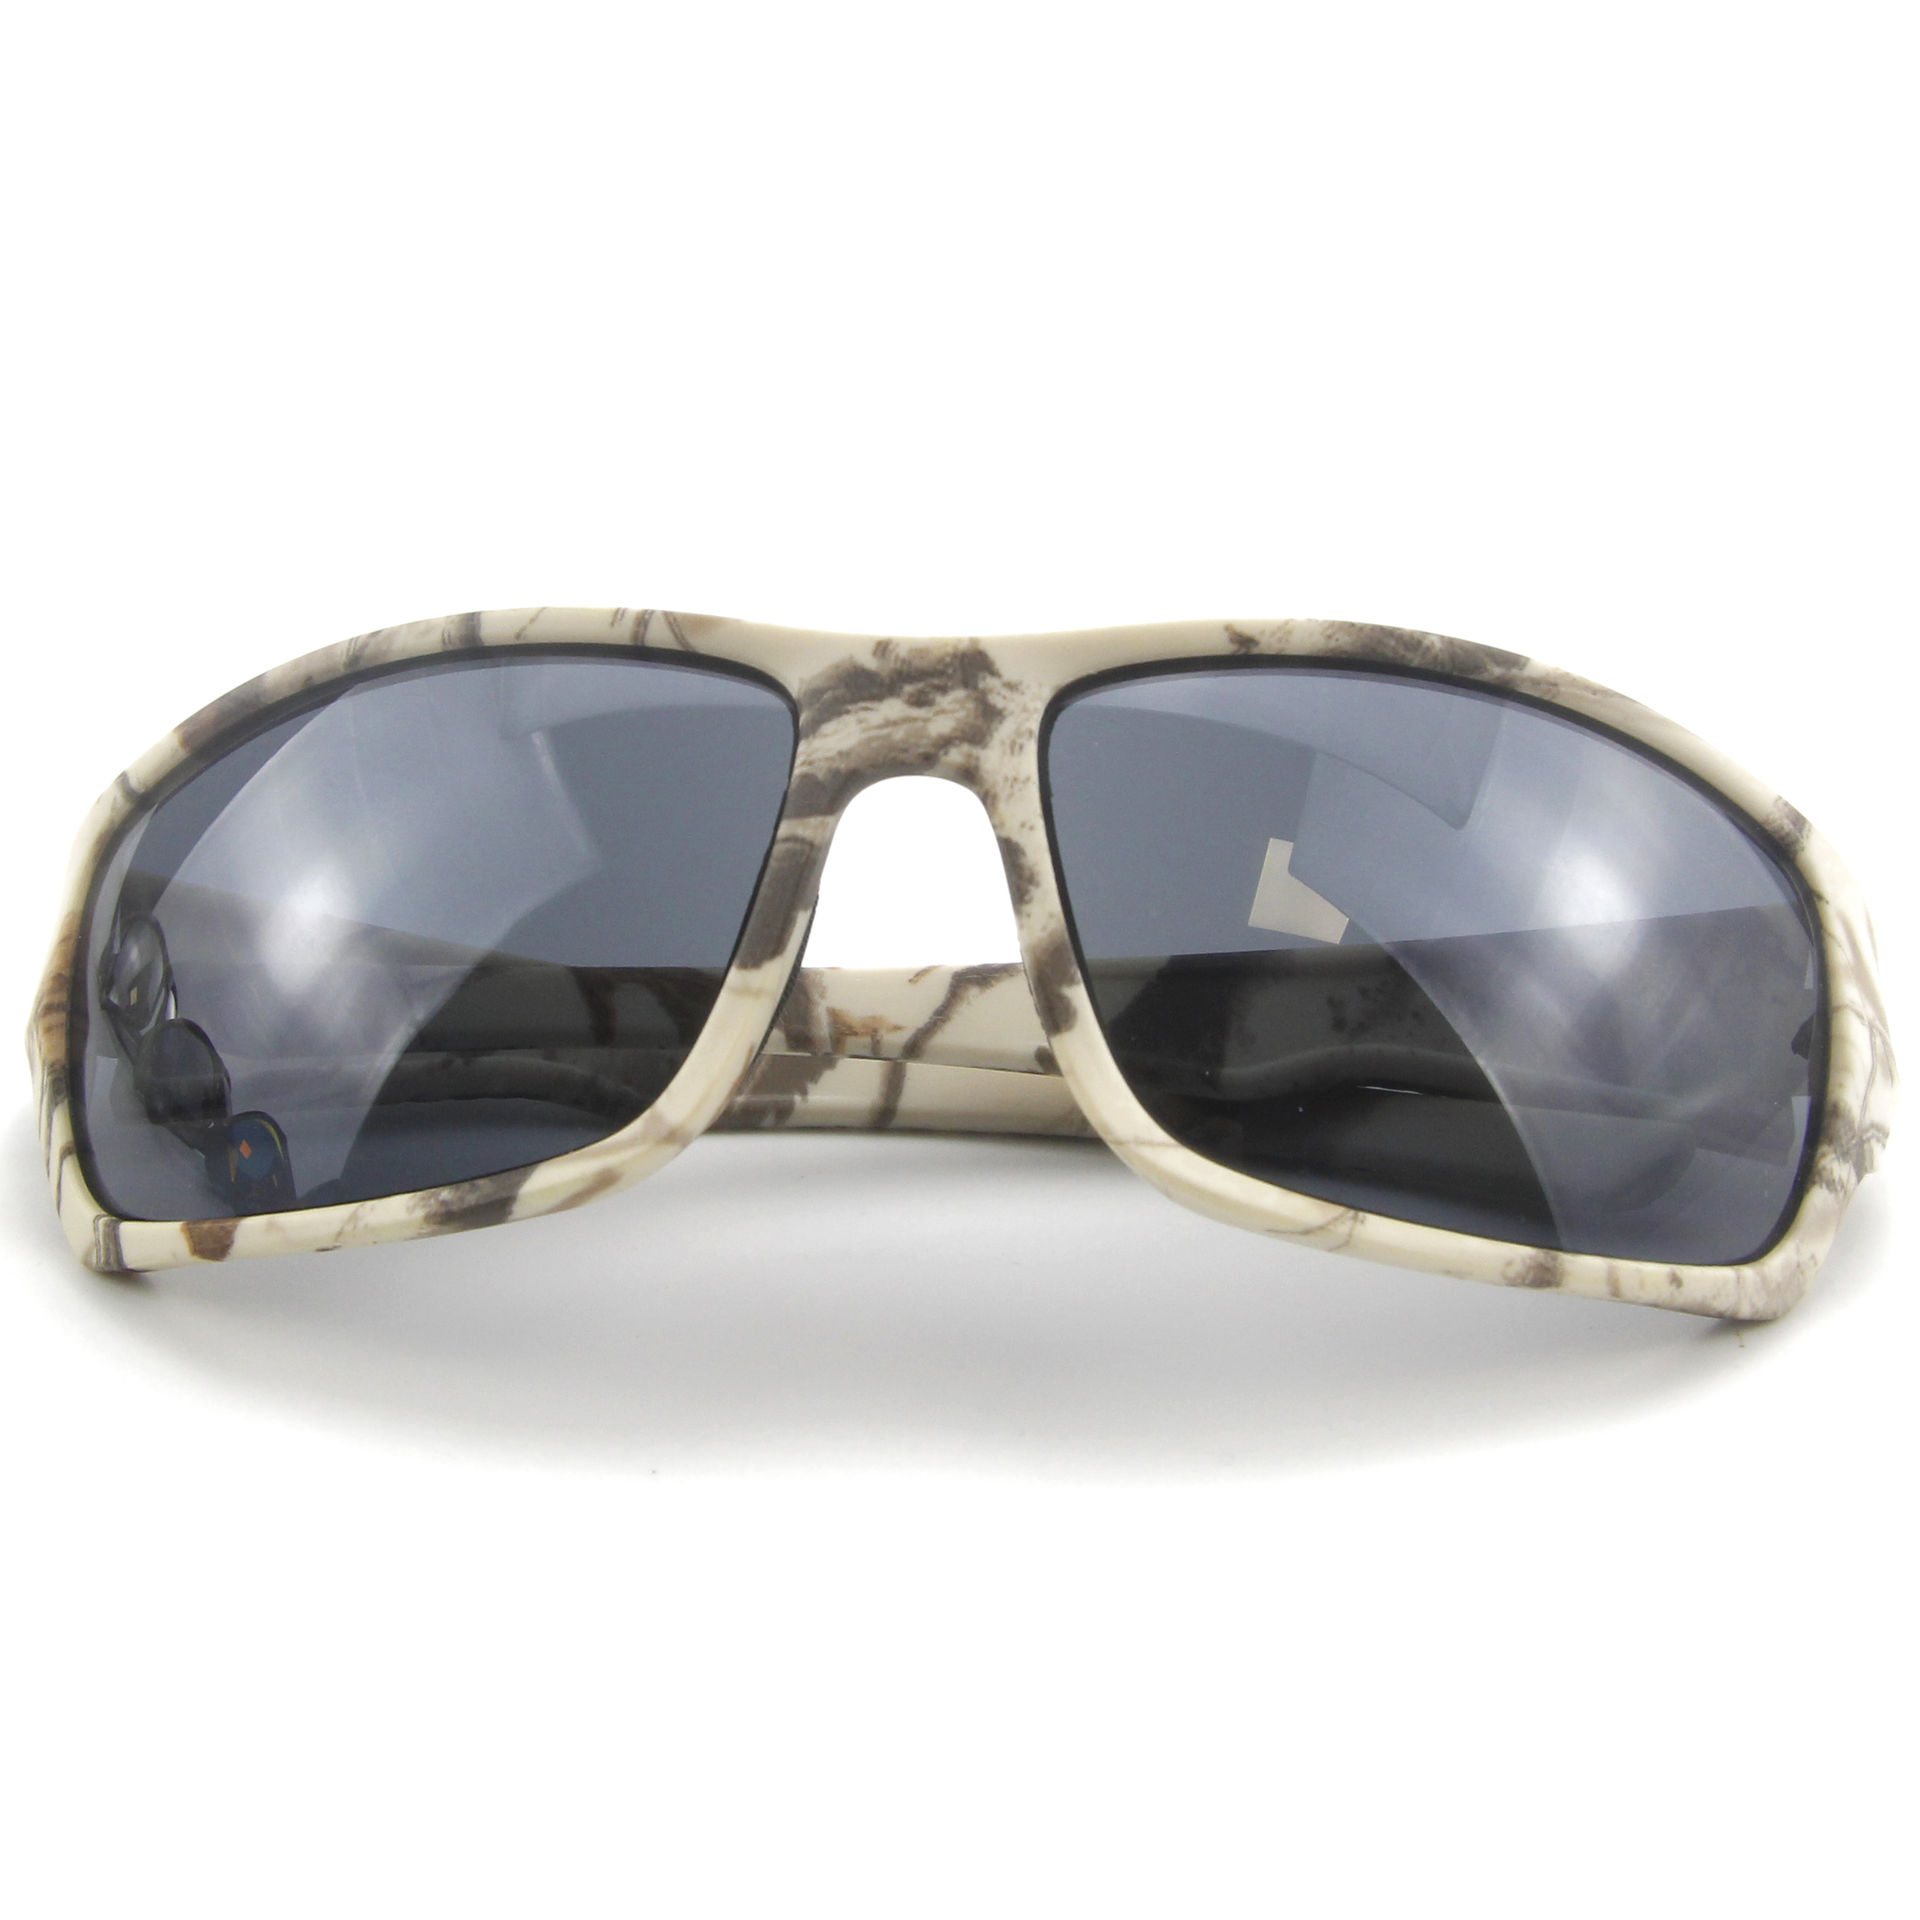 EUGENIA Top Selling Fashion Sports MIrror Uv400 Lens Camo Sunglasses